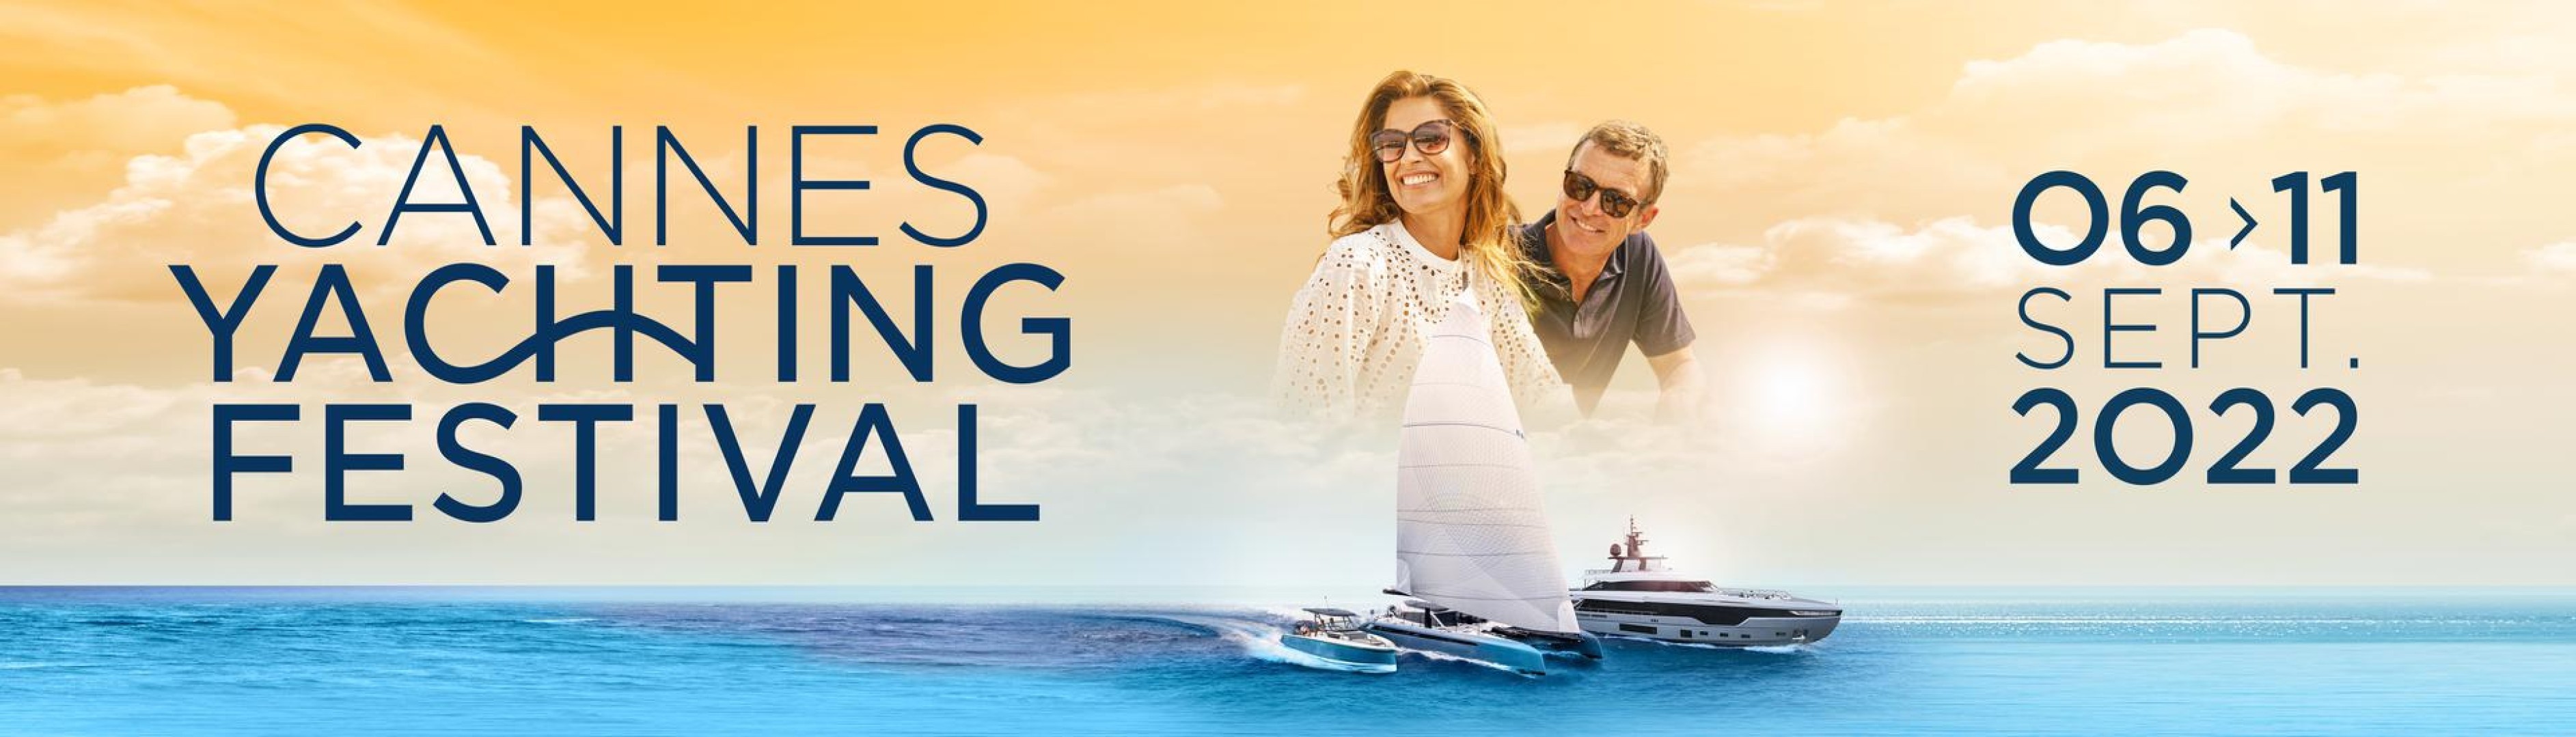 Il Cannes Yachting Festival torna dal 6 all'11 settembre 2022